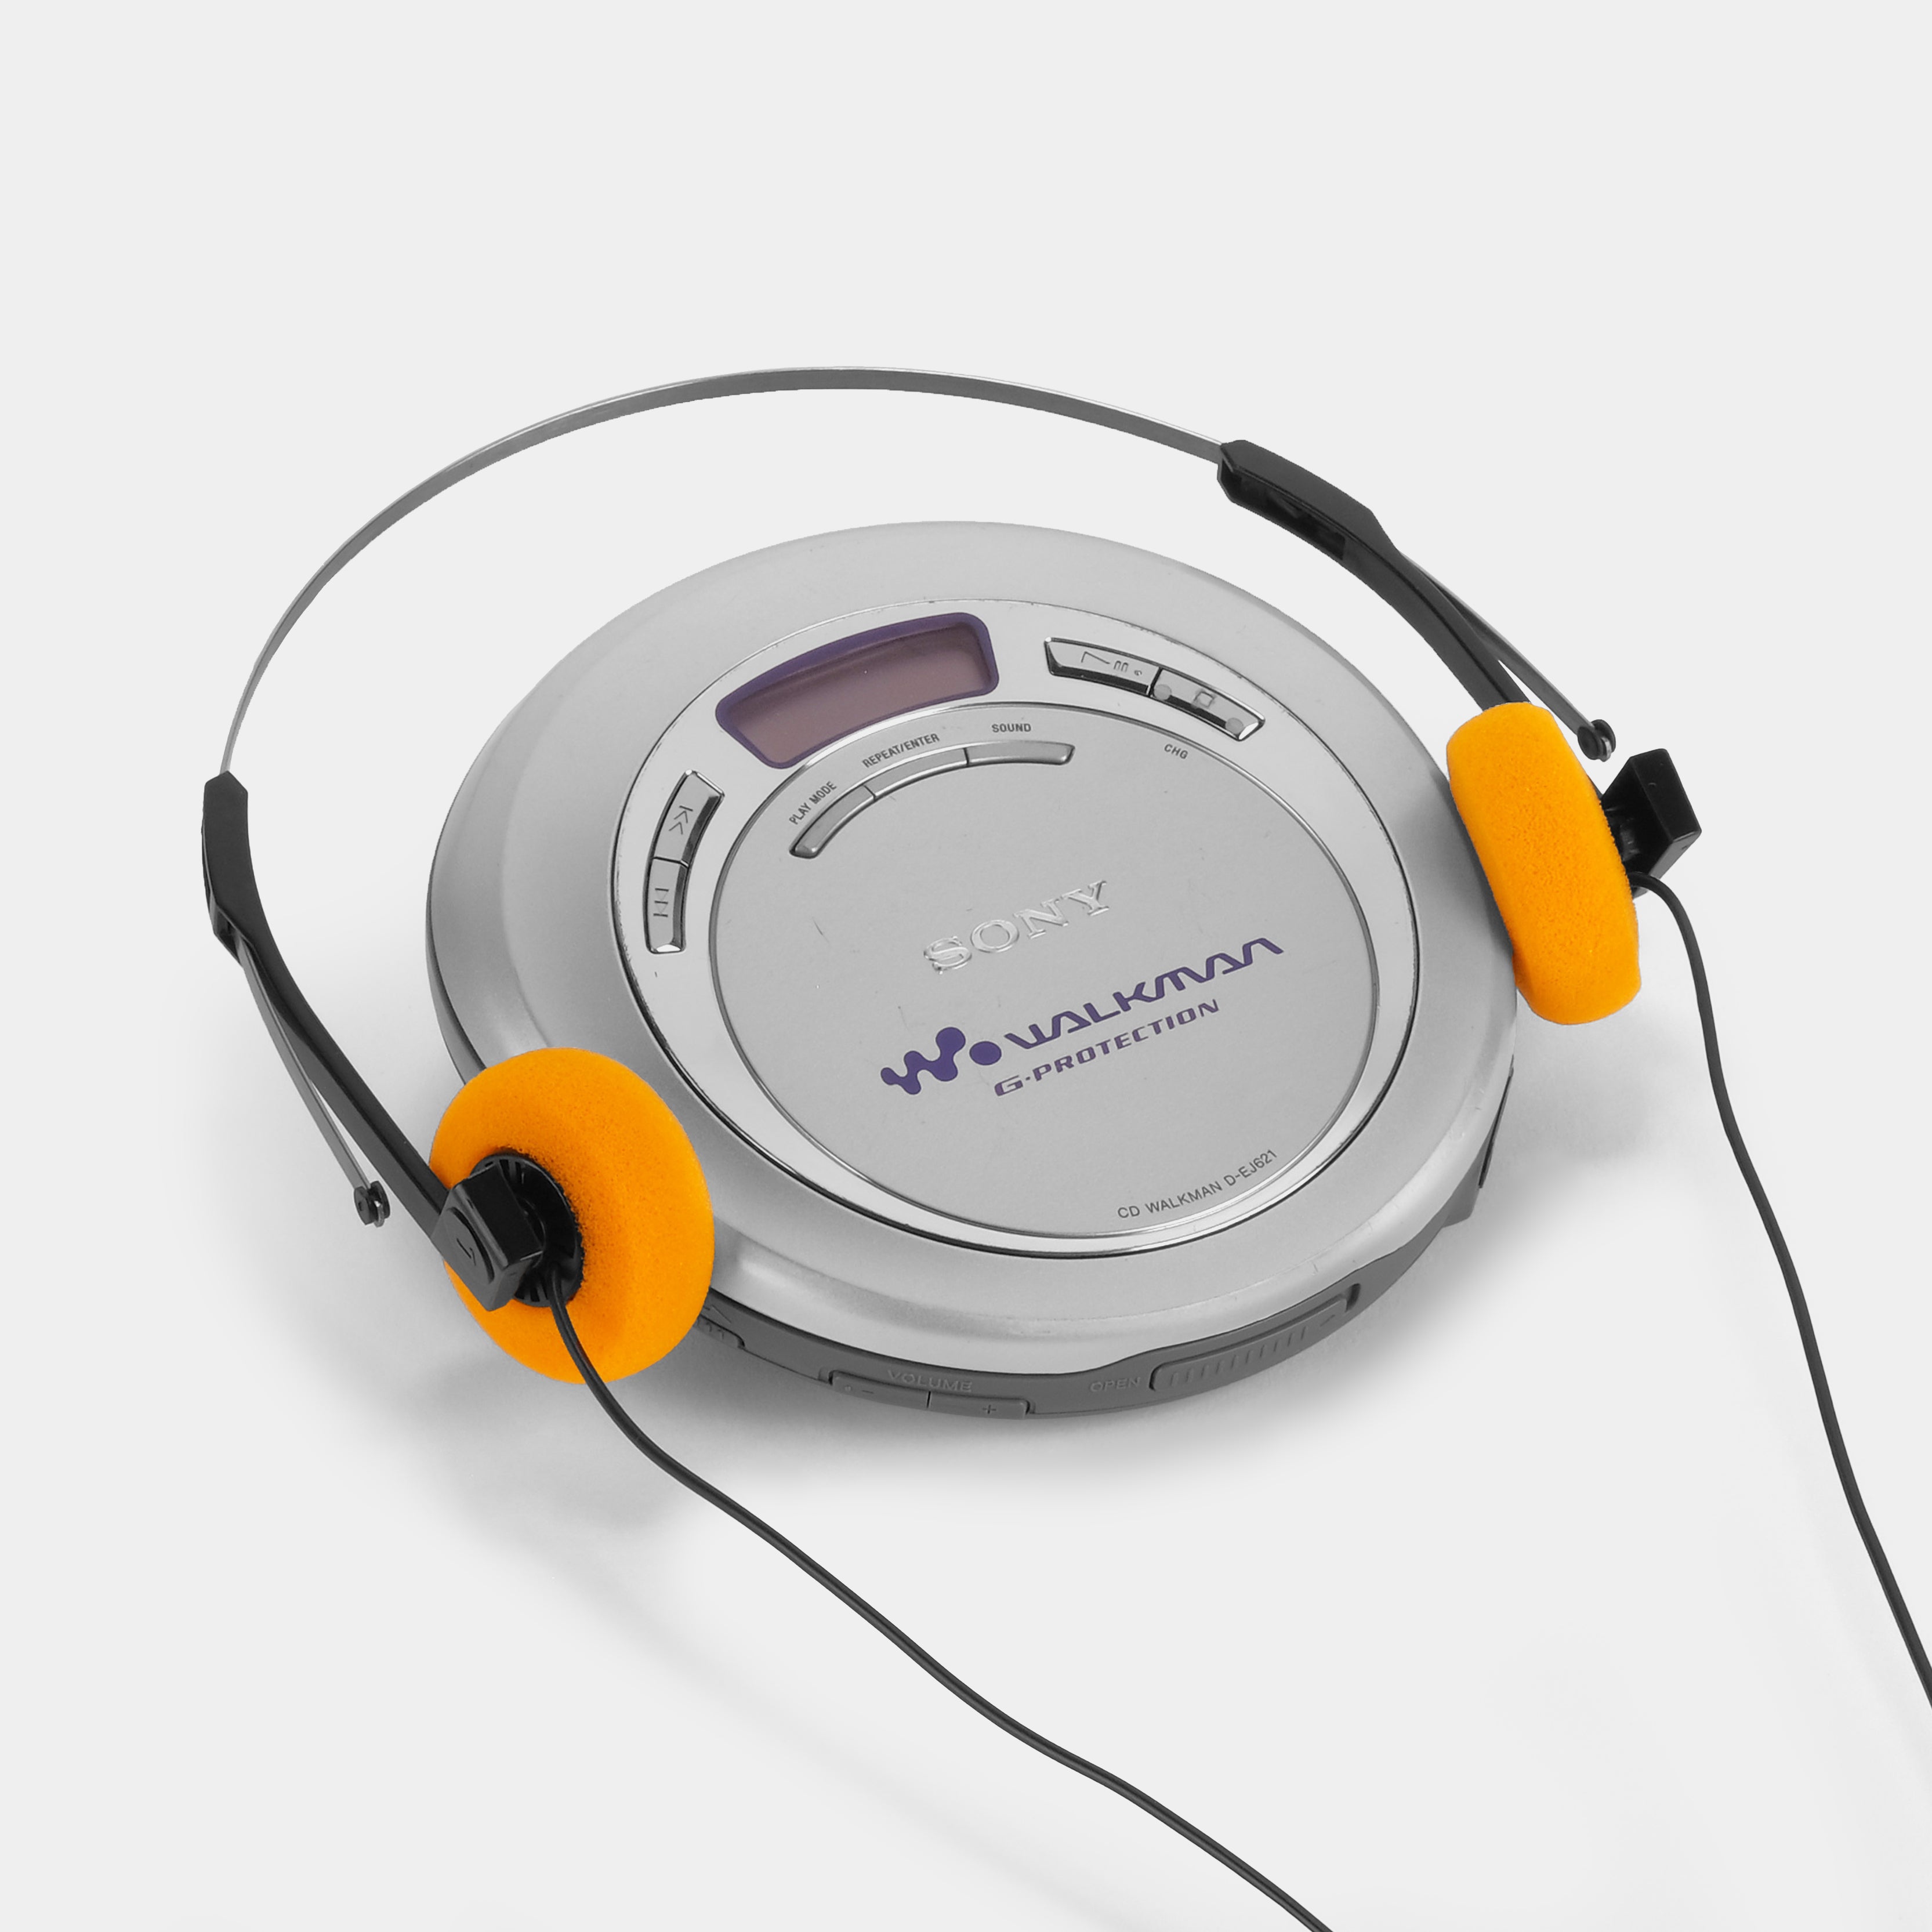 Sony Walkman D-EJ621 Portable CD Player